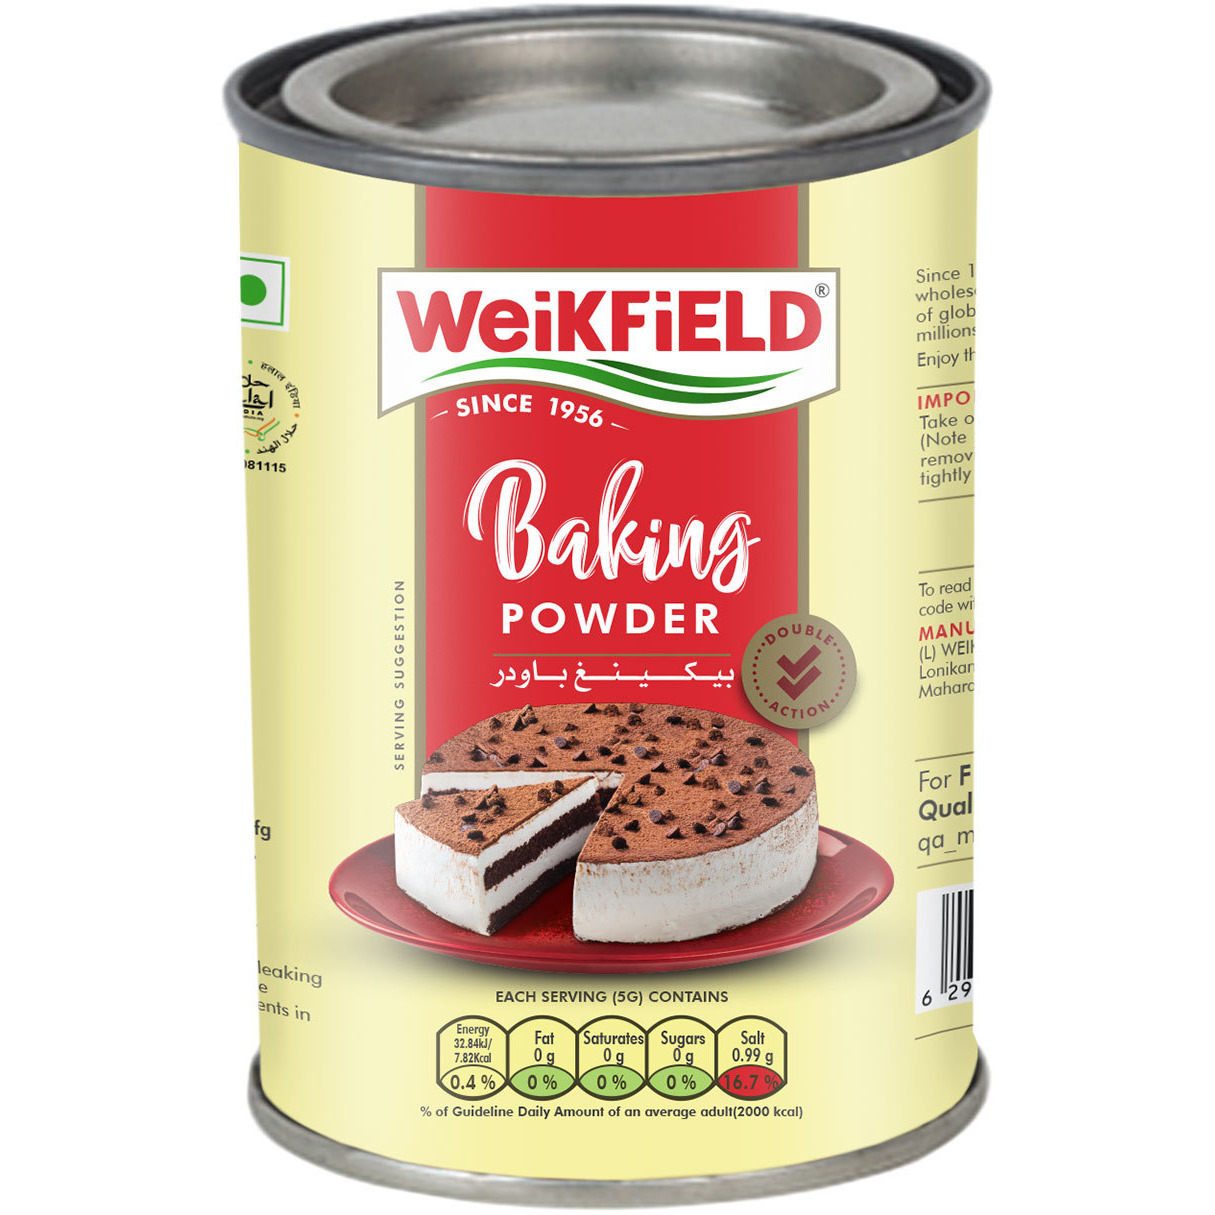 Case of 12 - Weikfield Baking Powder - 450 Gm (15.8 Oz) [50% Off]